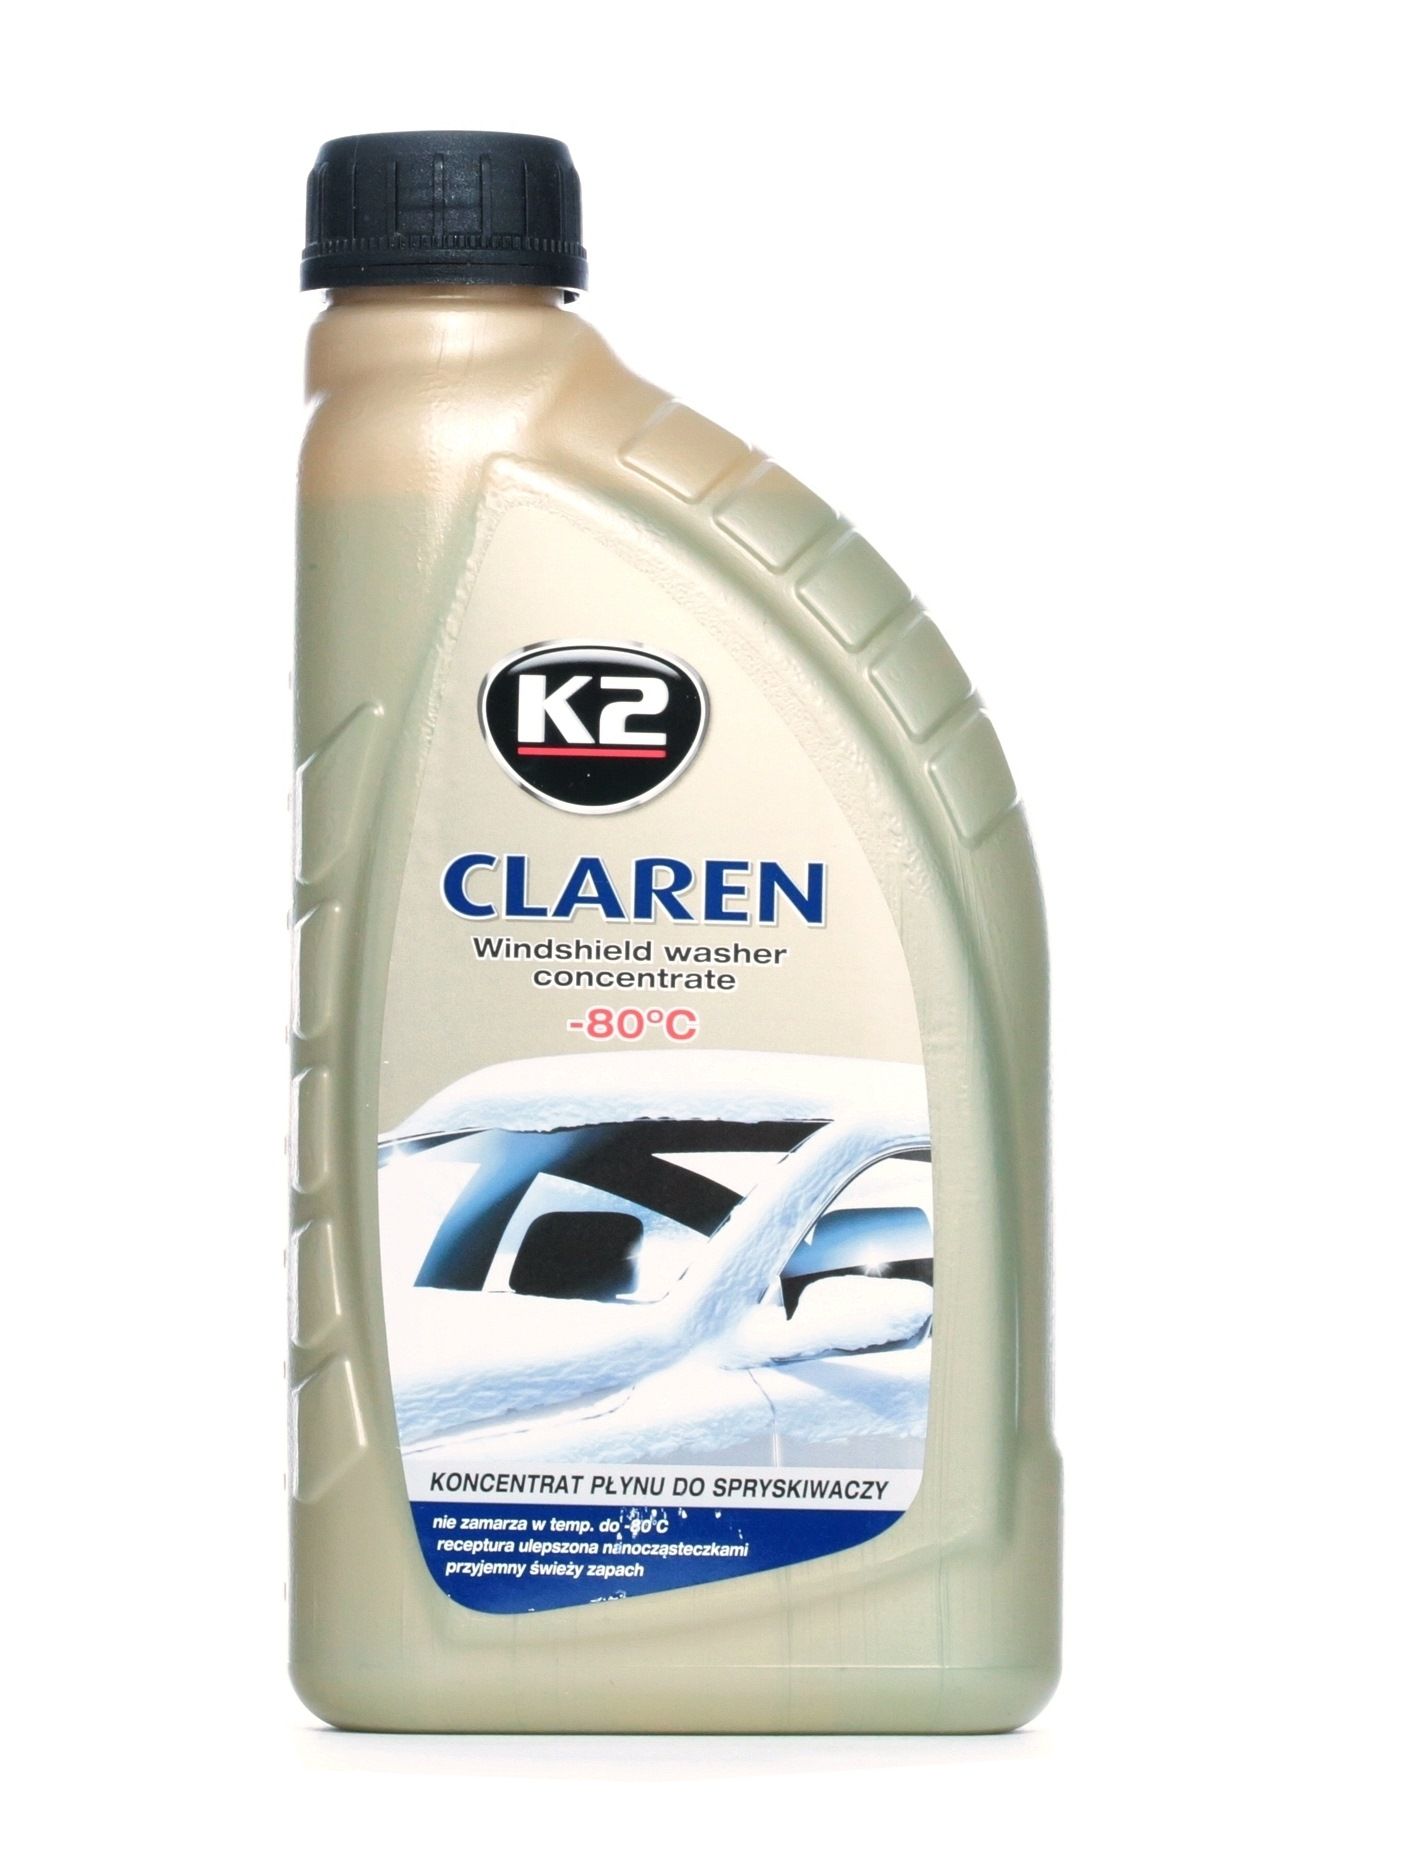 K2 K611 Υγρο υαλοκαθαριστηρων Φιάλη, Περιοχή θερμοκρασίας έως: -80°C, Χωρητικότητα: 1l